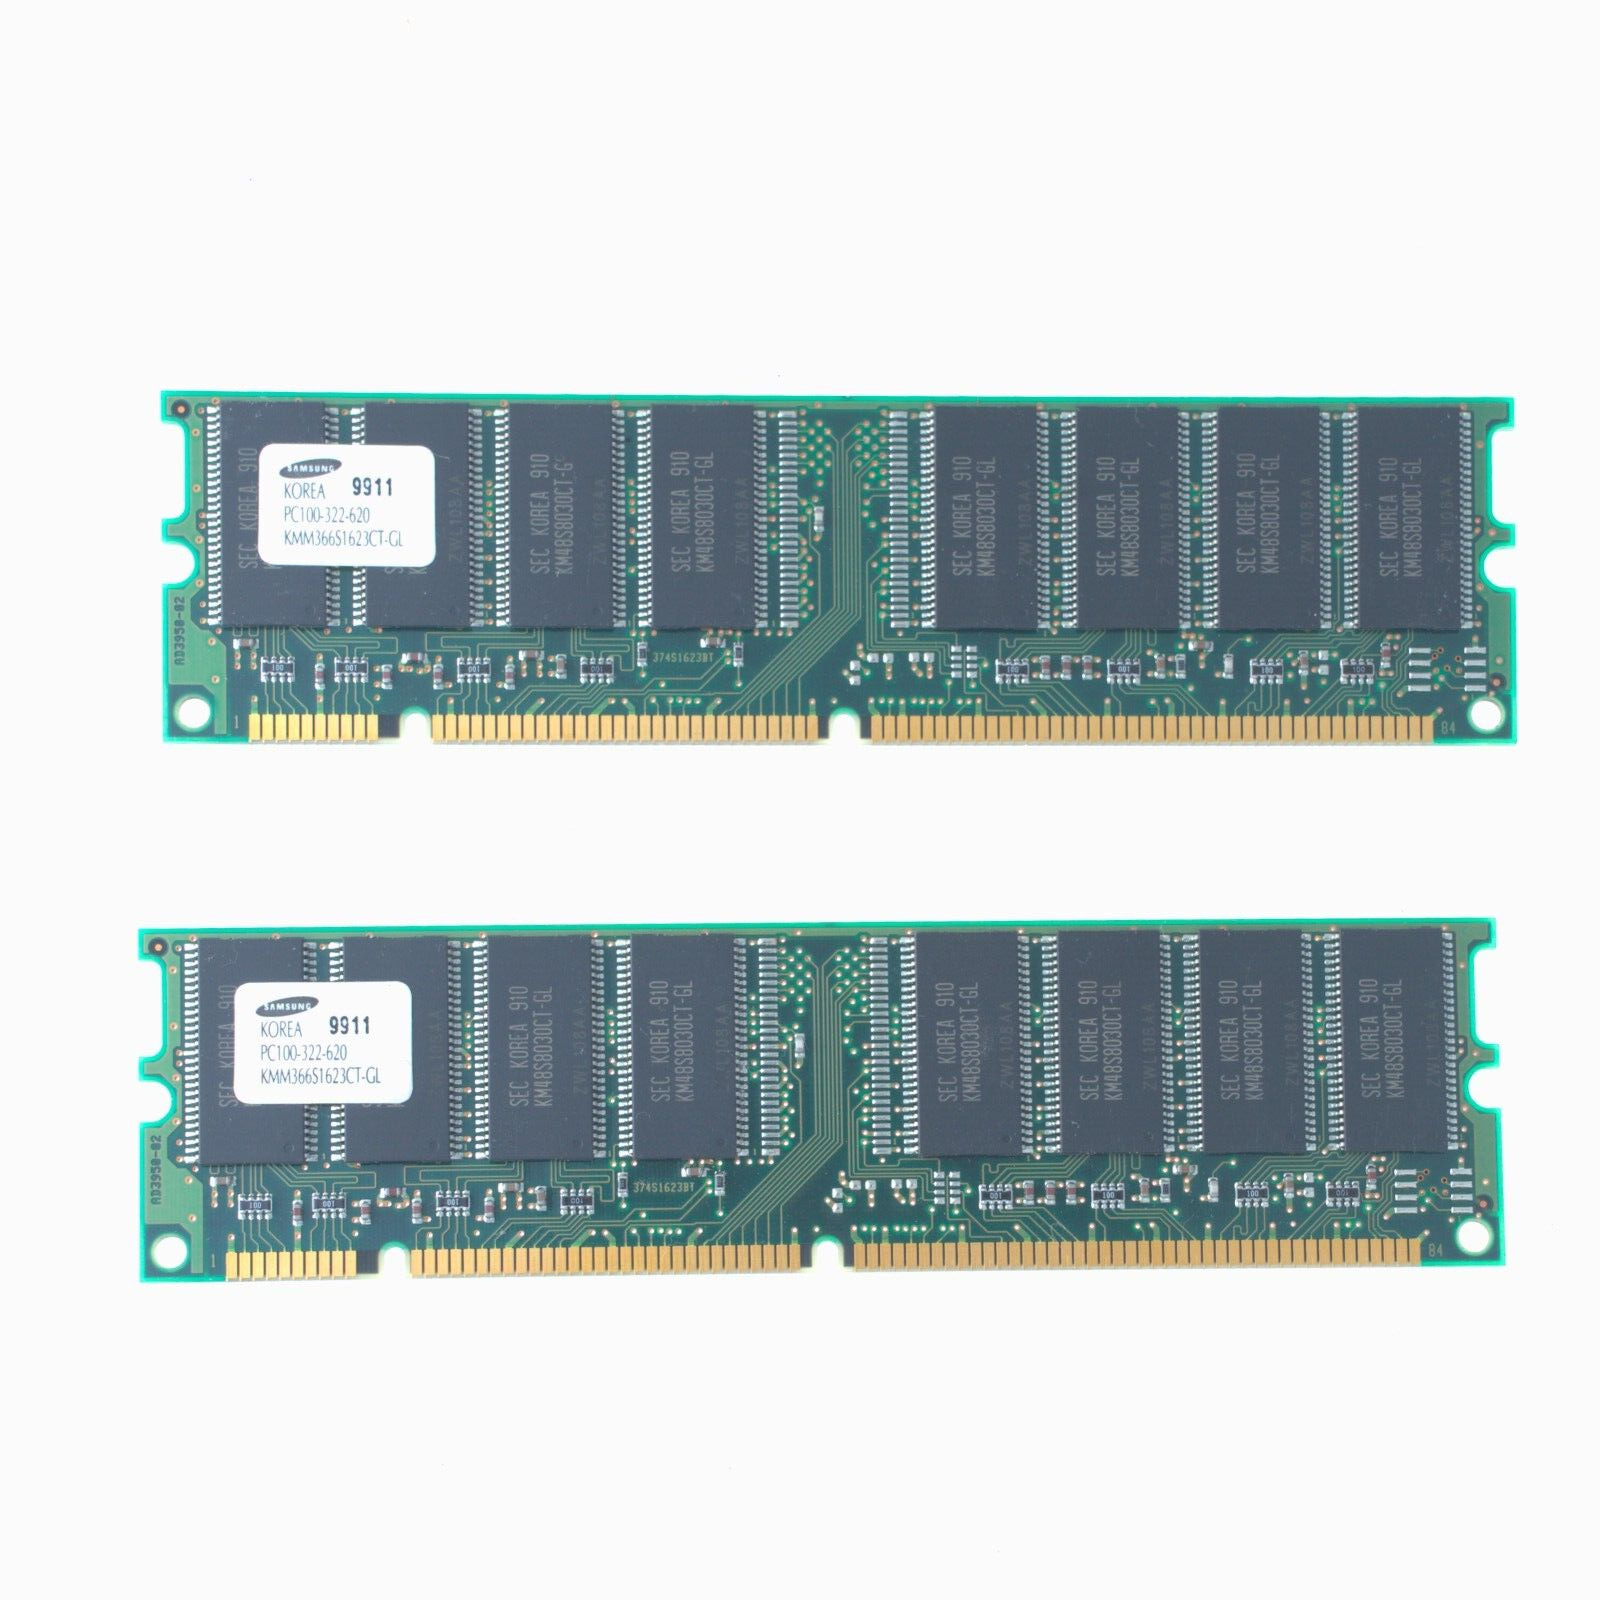 2 x Samsung 9911 PC100-322-620 KMM366S1623CT-GL RAM Memory